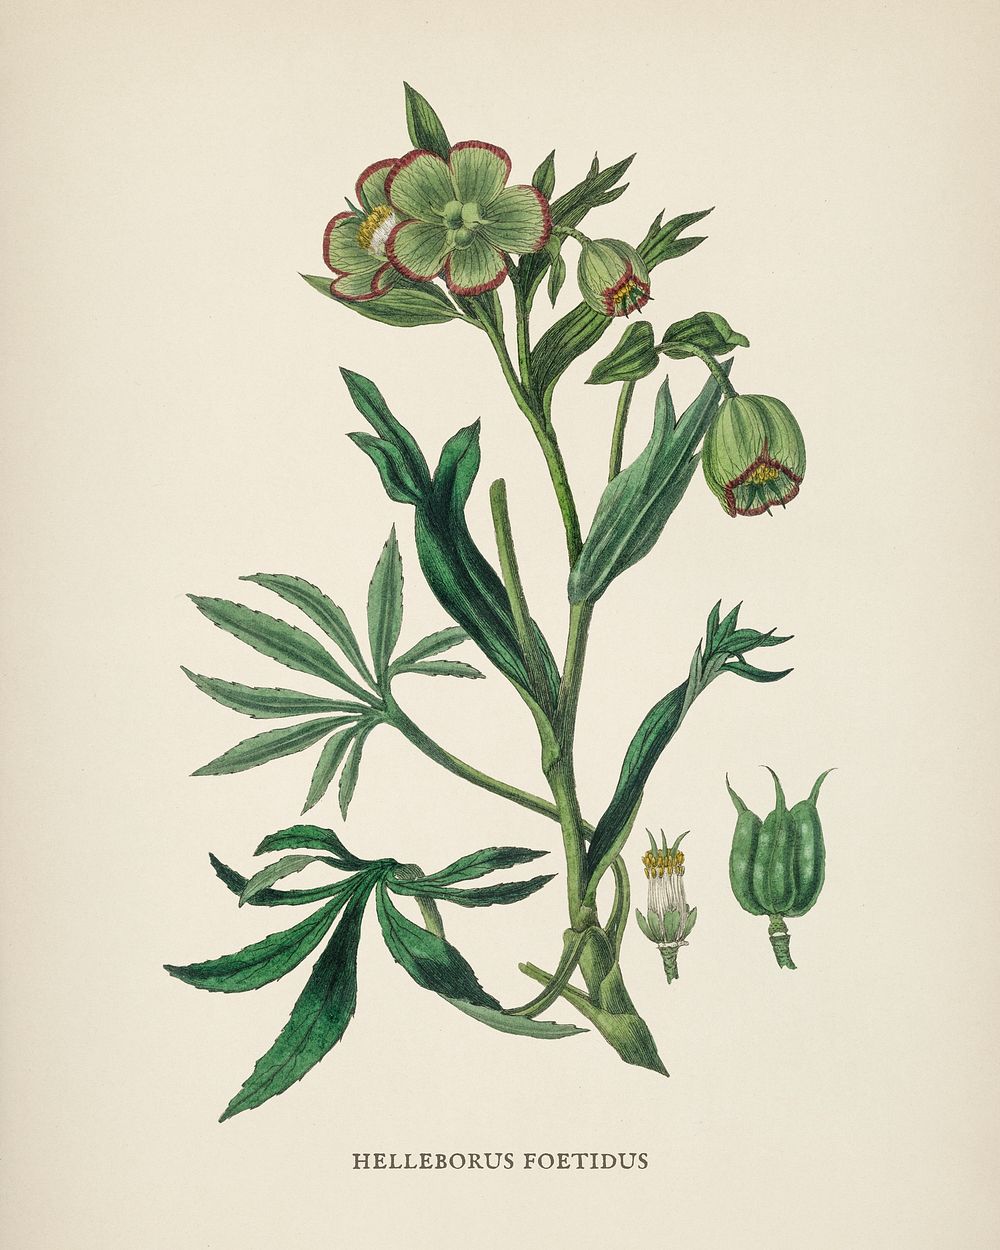 Stinking hellebore (Helleborus foetidus) illustration from Medical Botany (1836) by John Stephenson and James Morss…